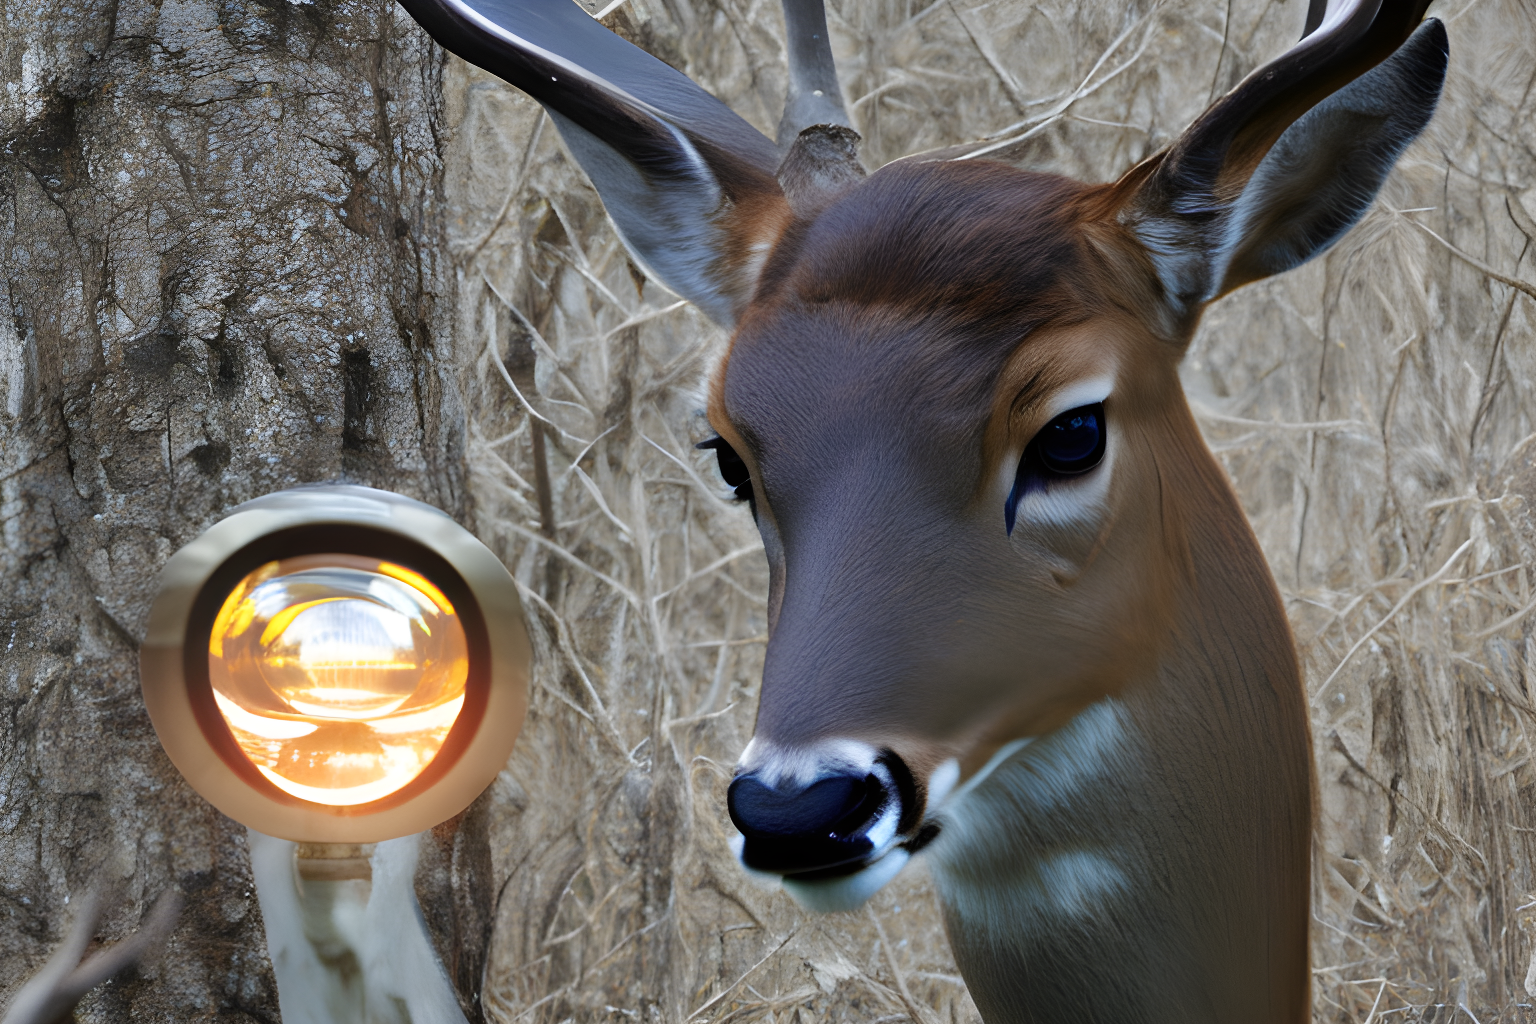 deer in headlight, who me?